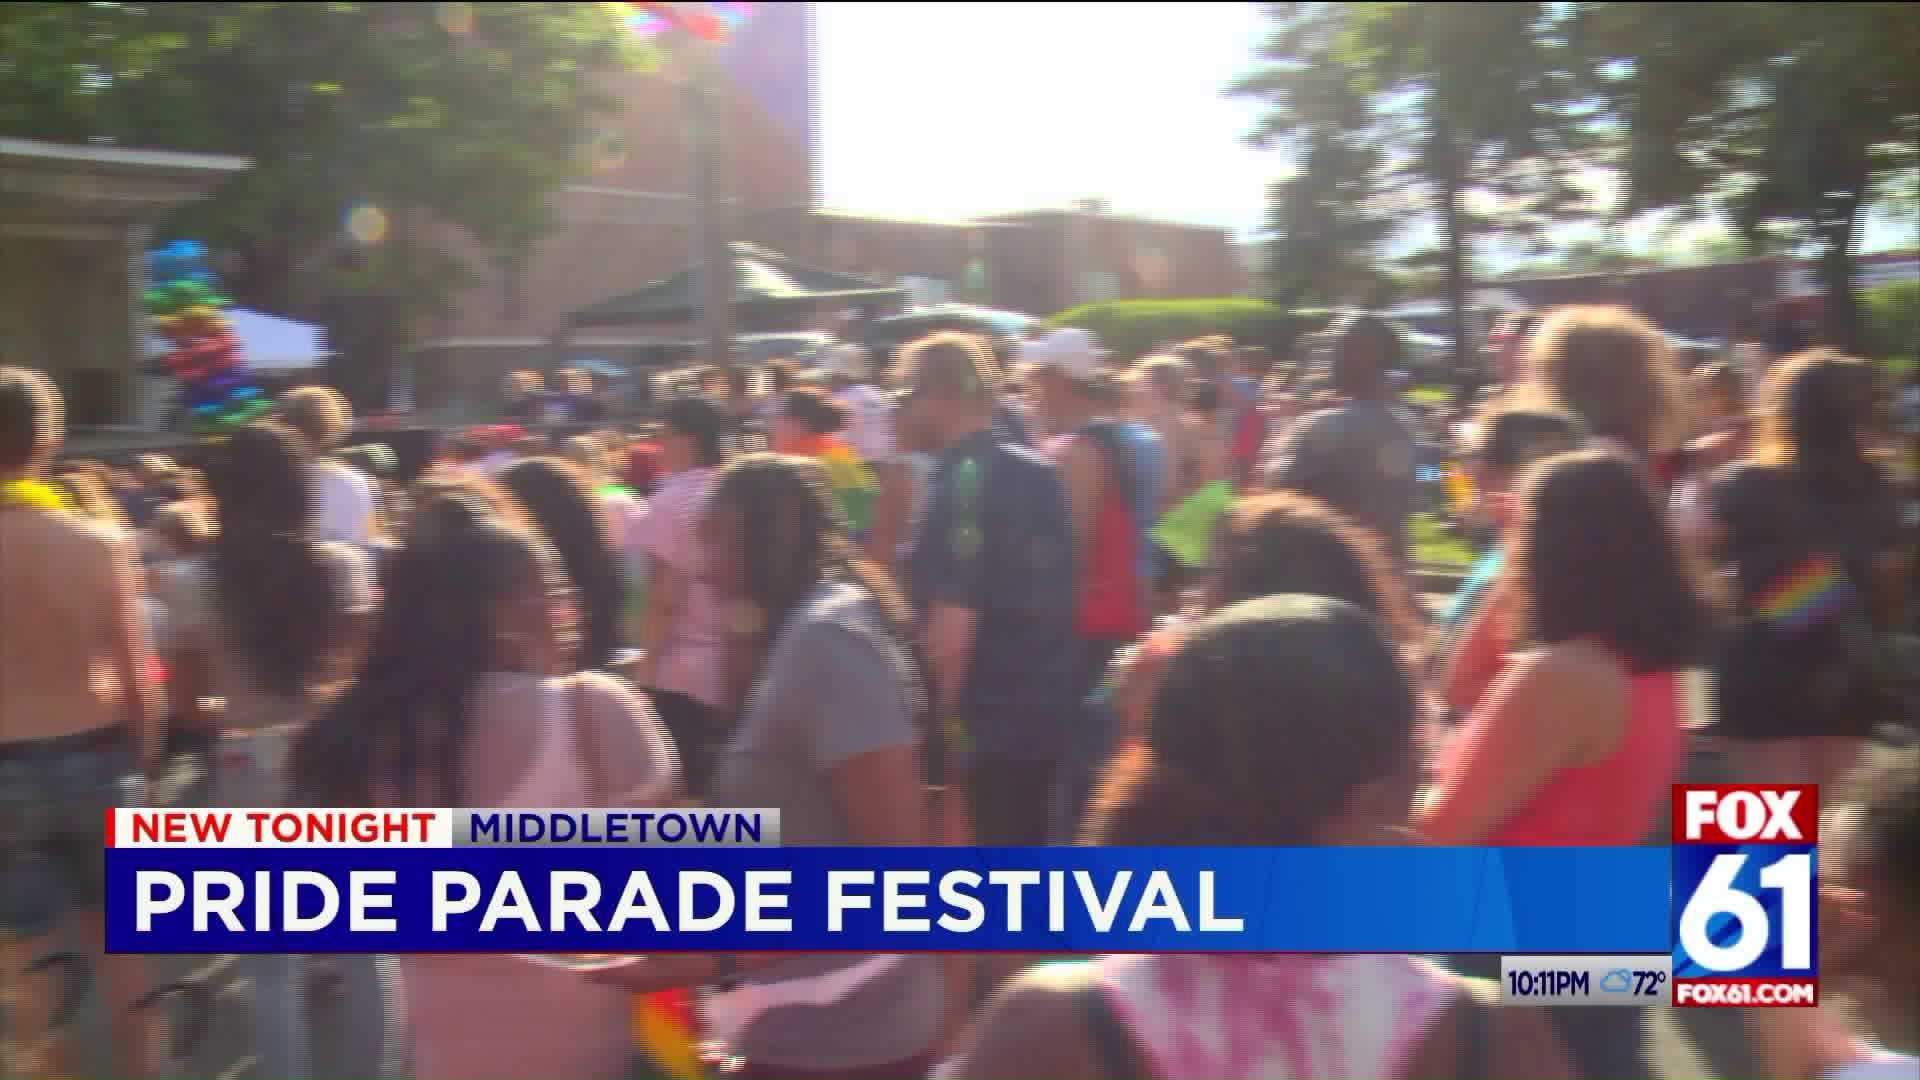 Pride parade festival in Middletown